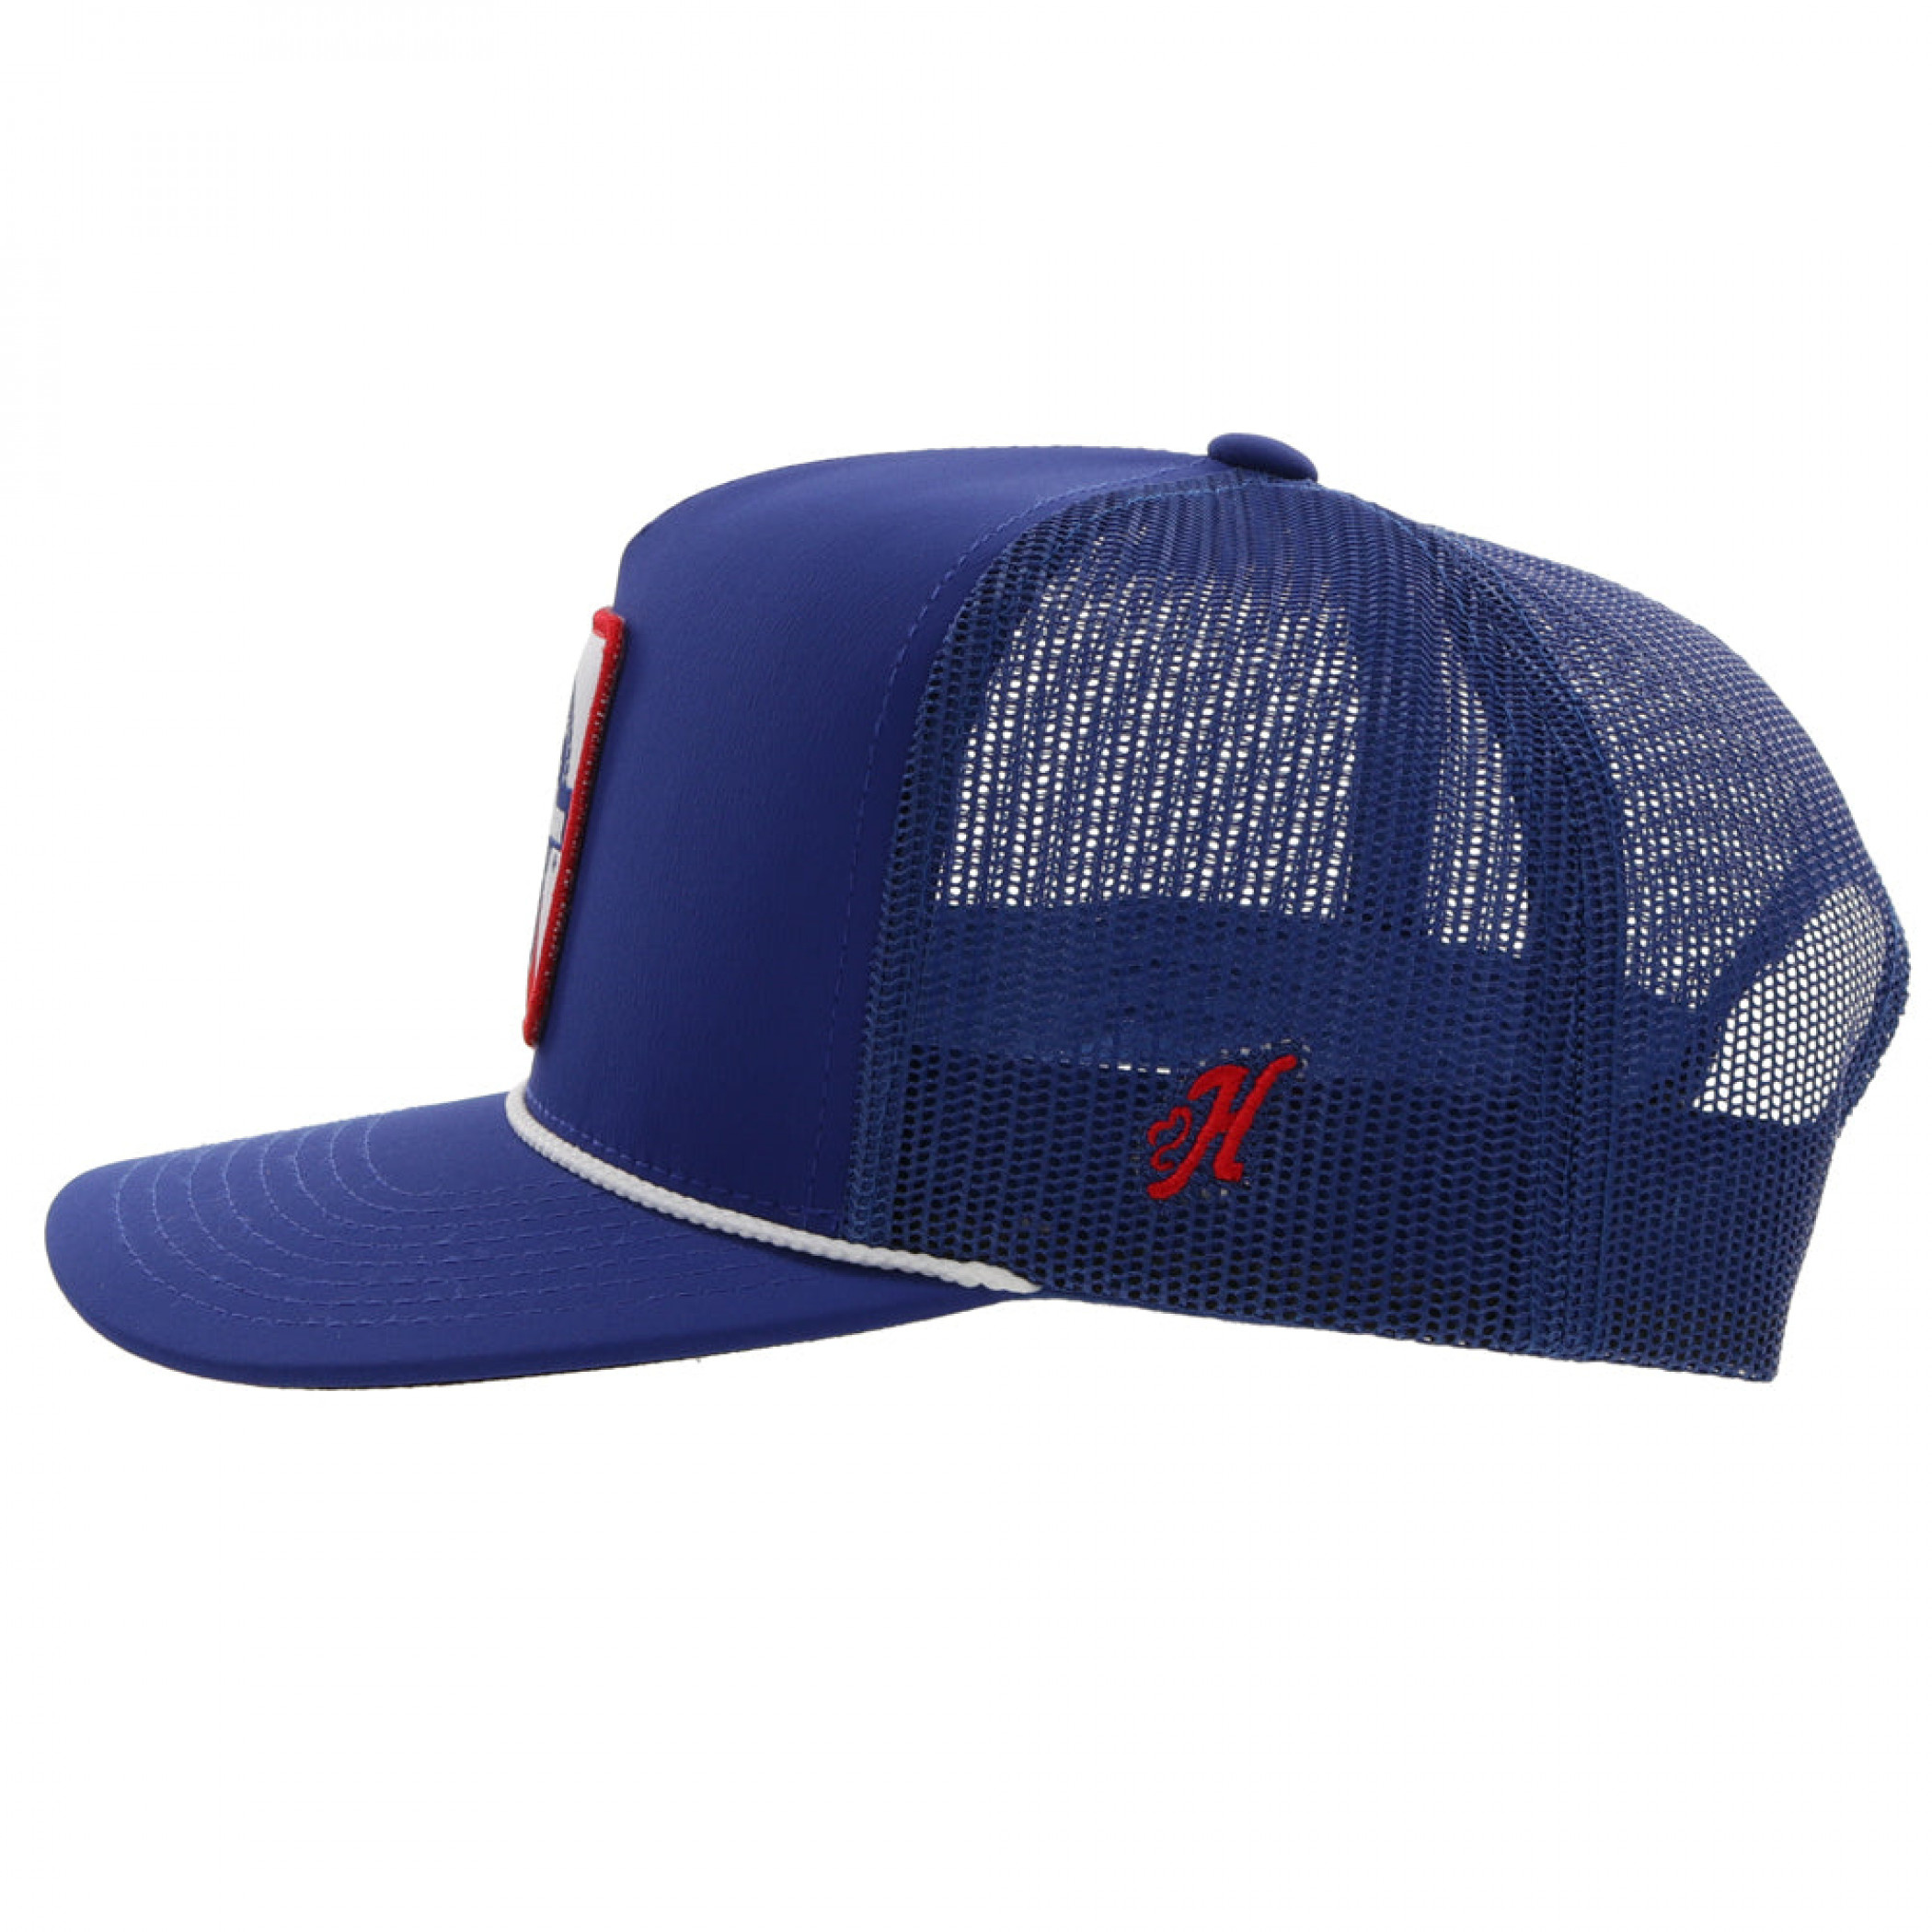 Pabst Blue Ribbon Embroidered Logo Snapback Hybrid Bill Trucker Hat